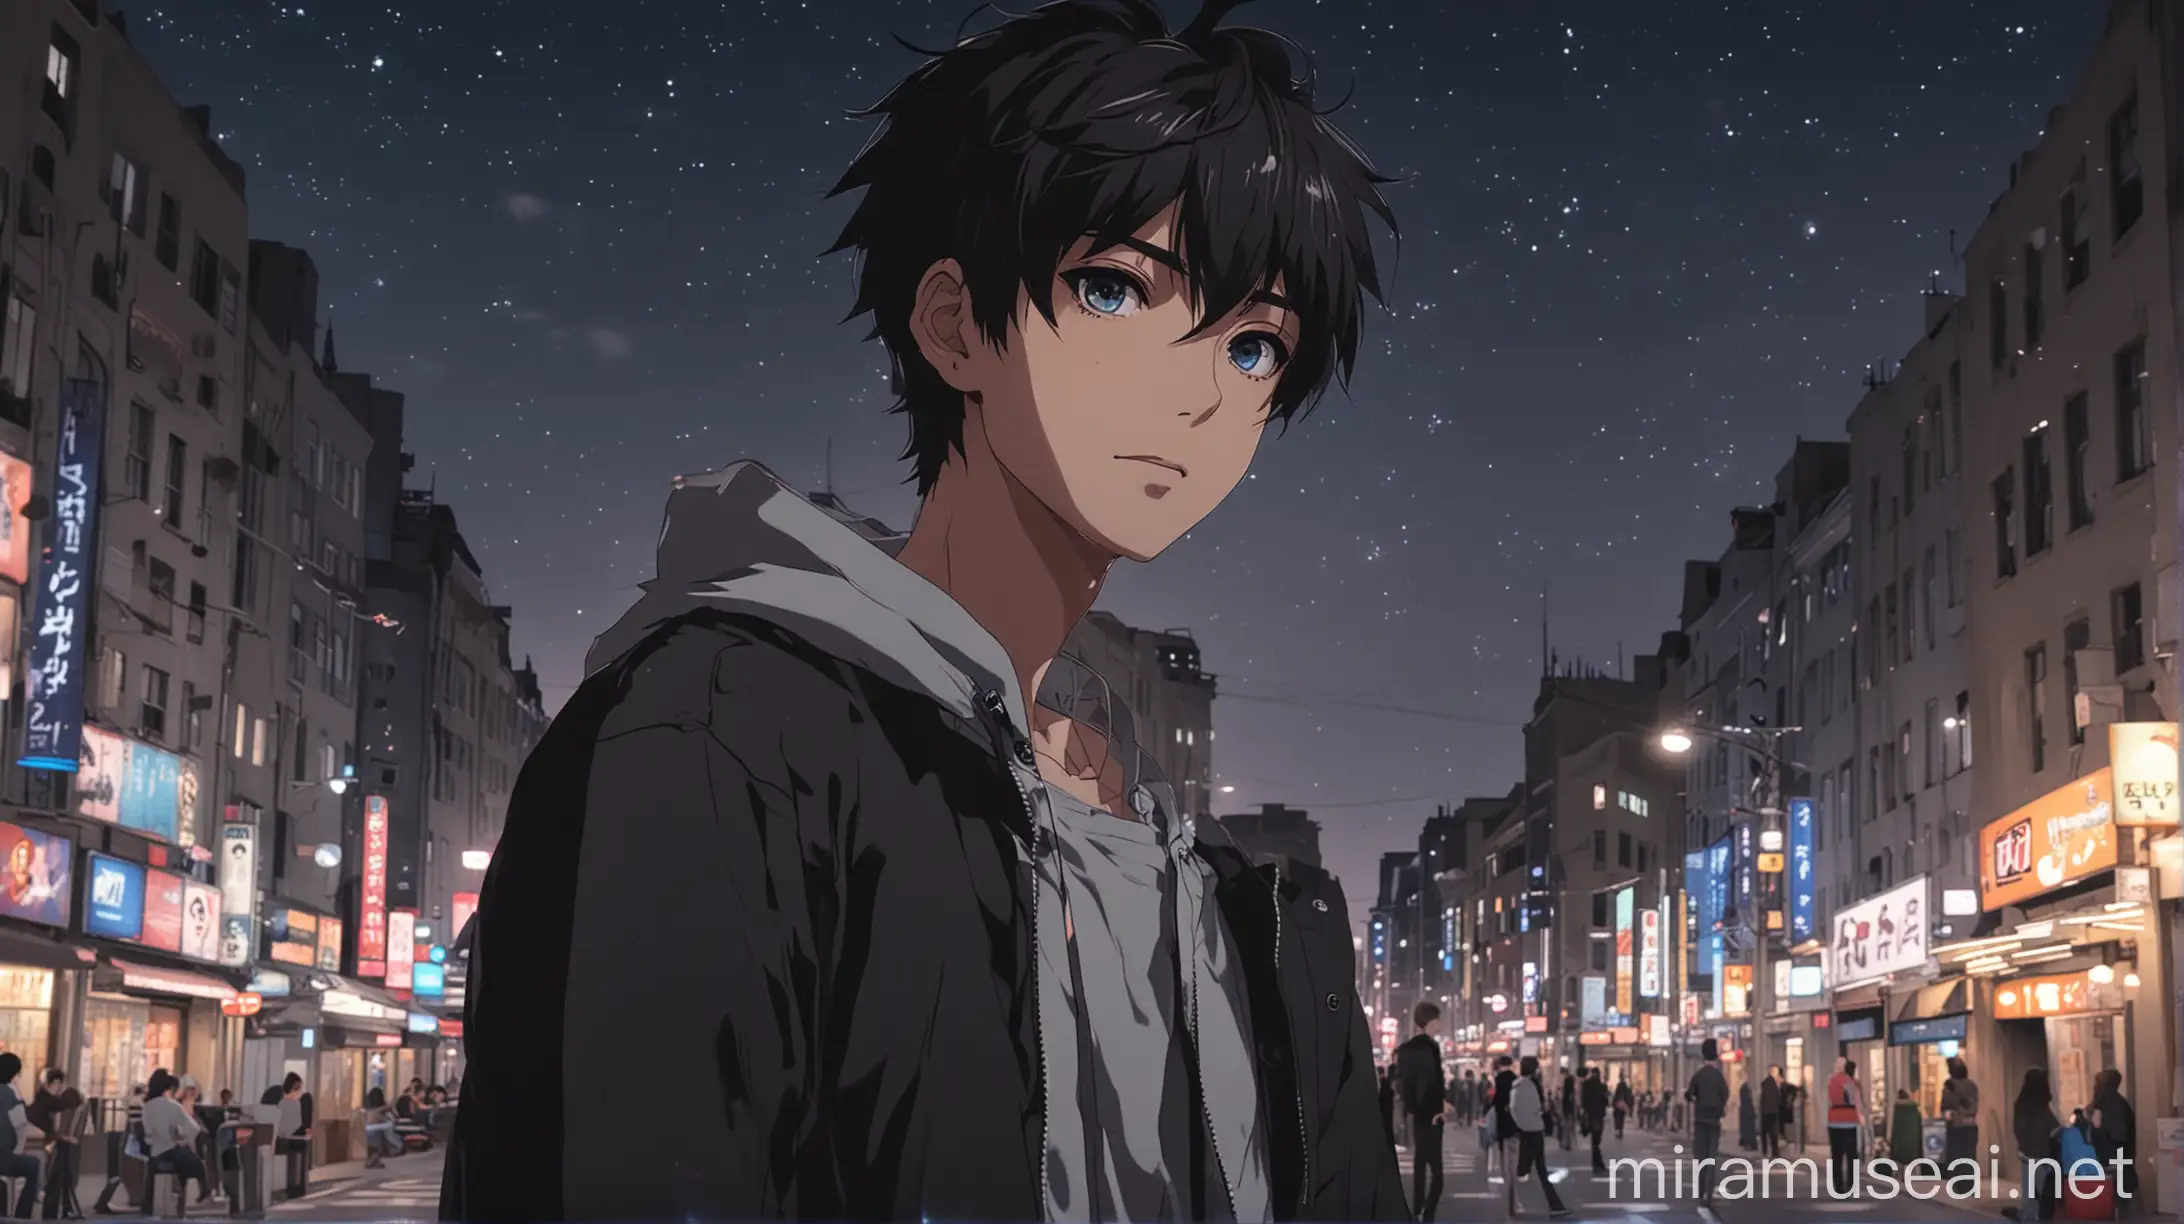 Anime Boy Enjoying the Serene Night Cityscape